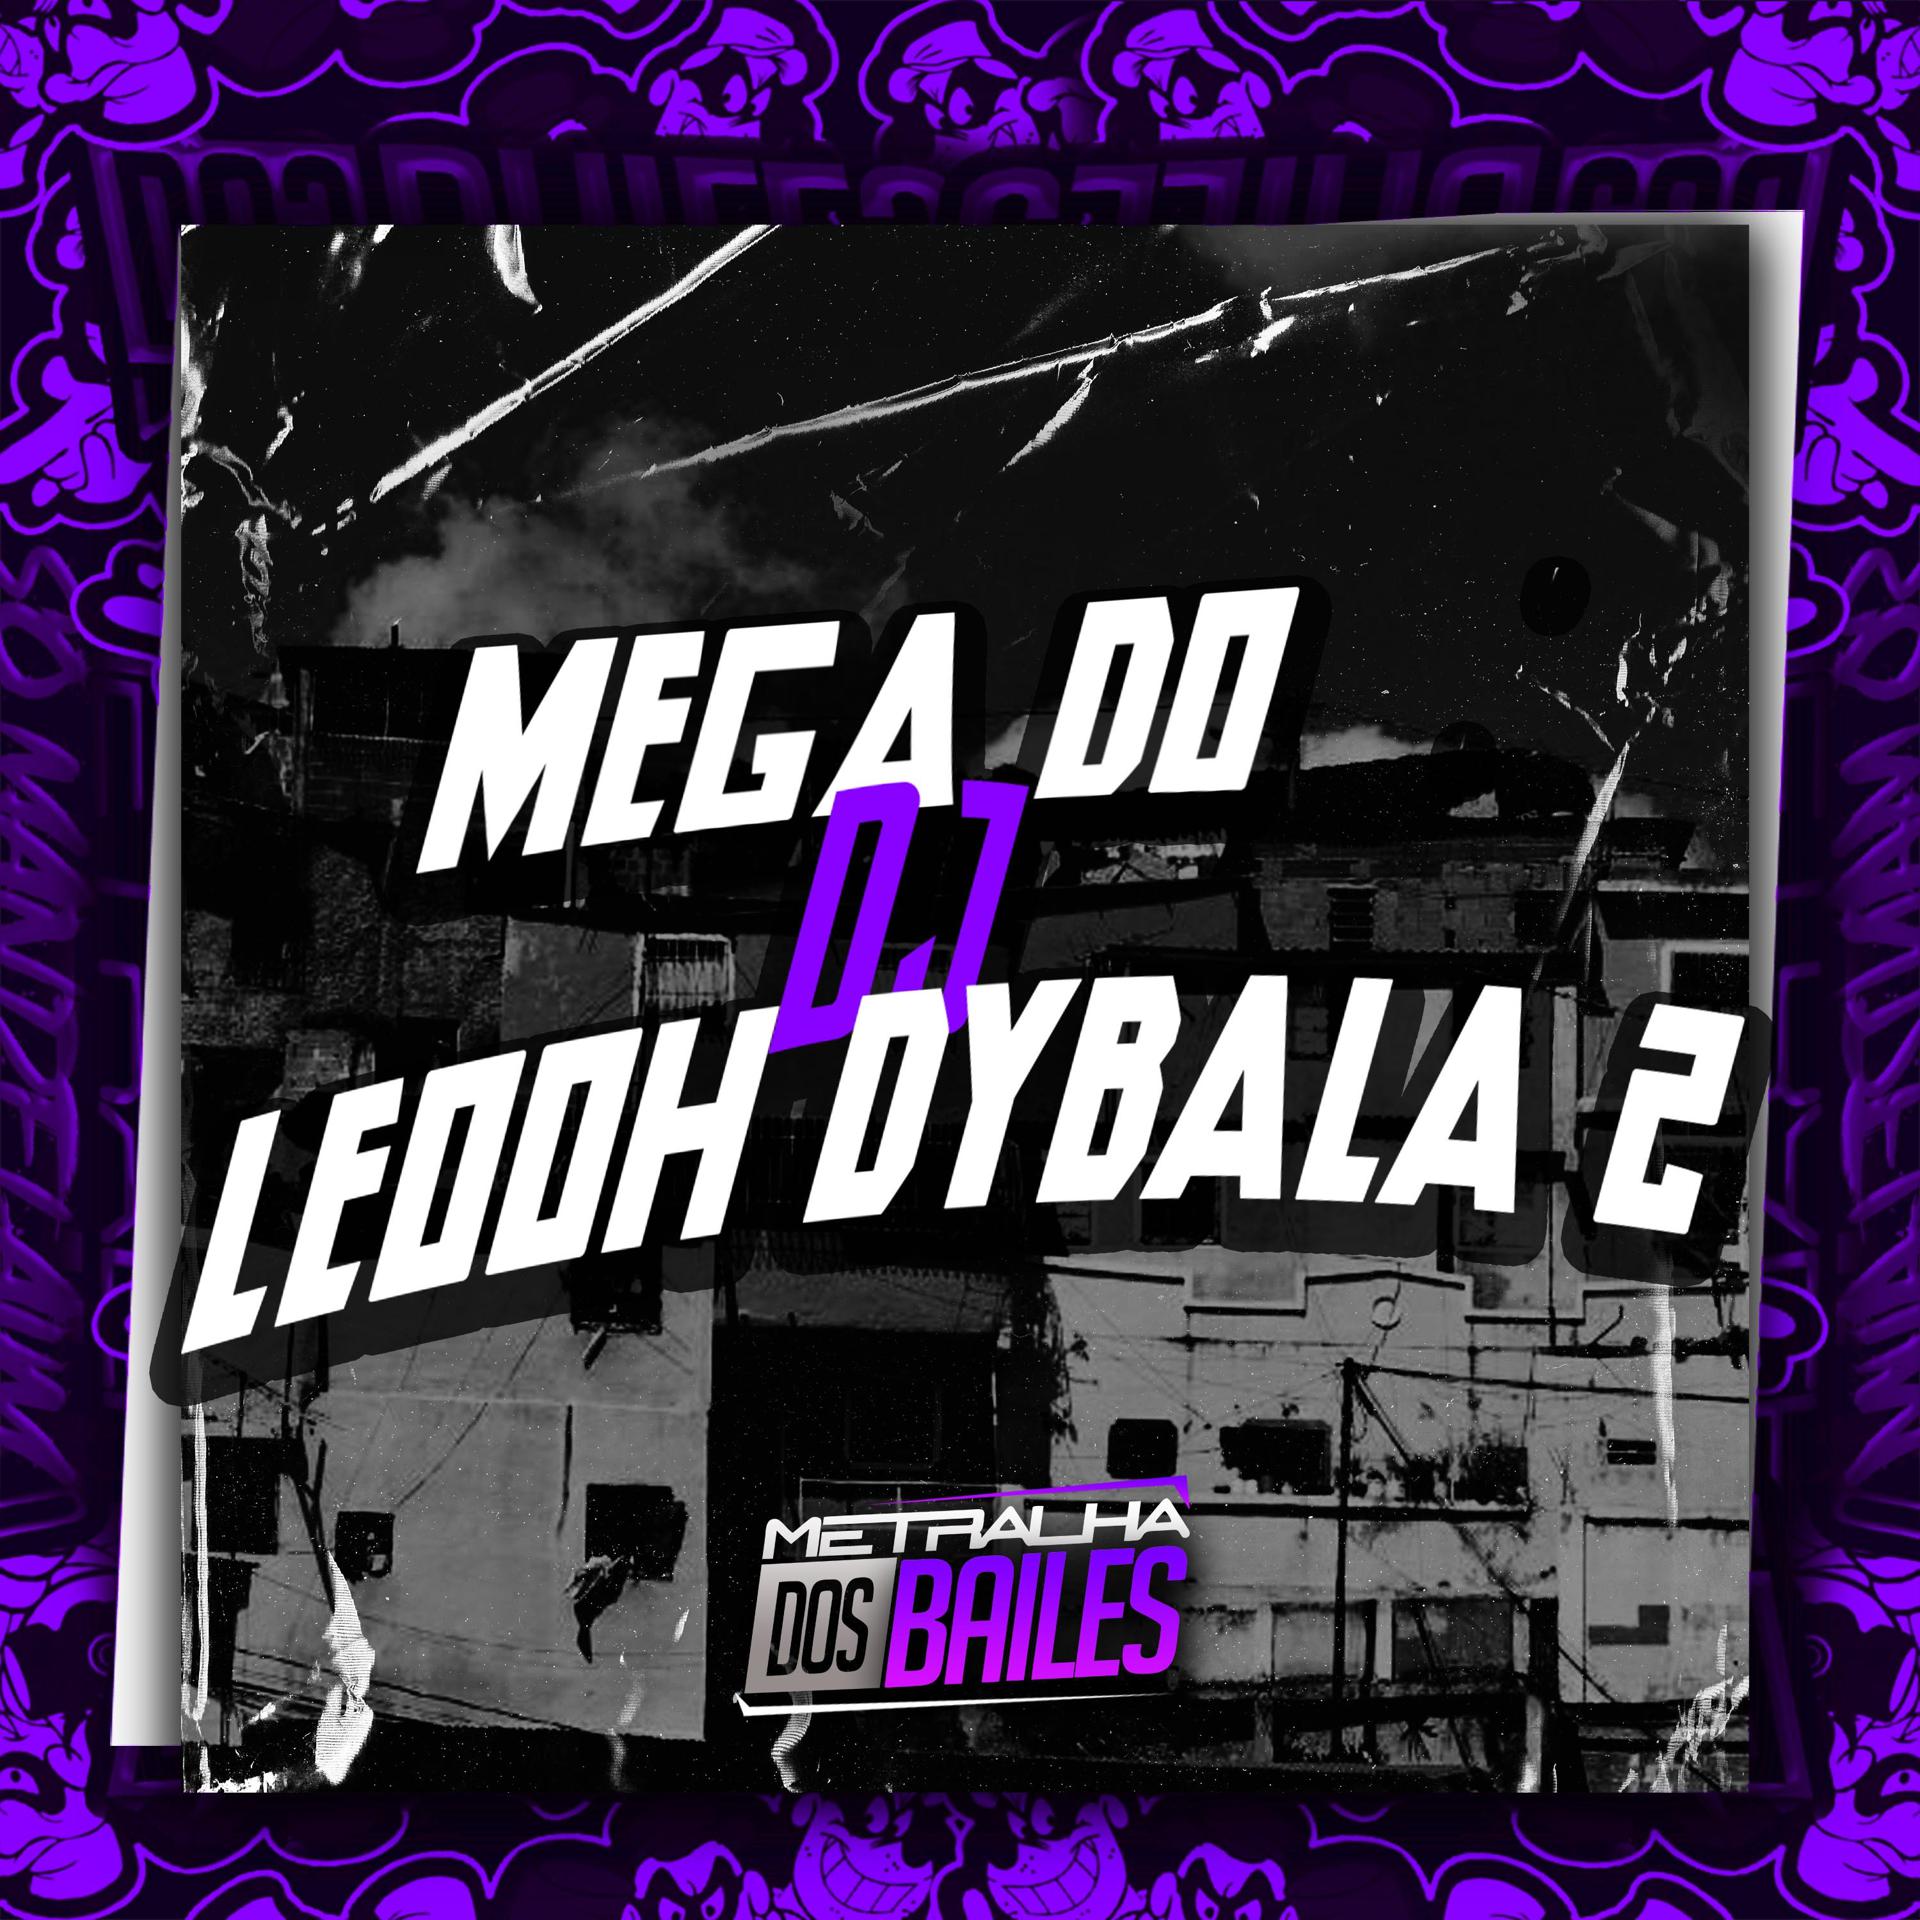 Постер альбома Mega do Dj Leooh Dybala 2